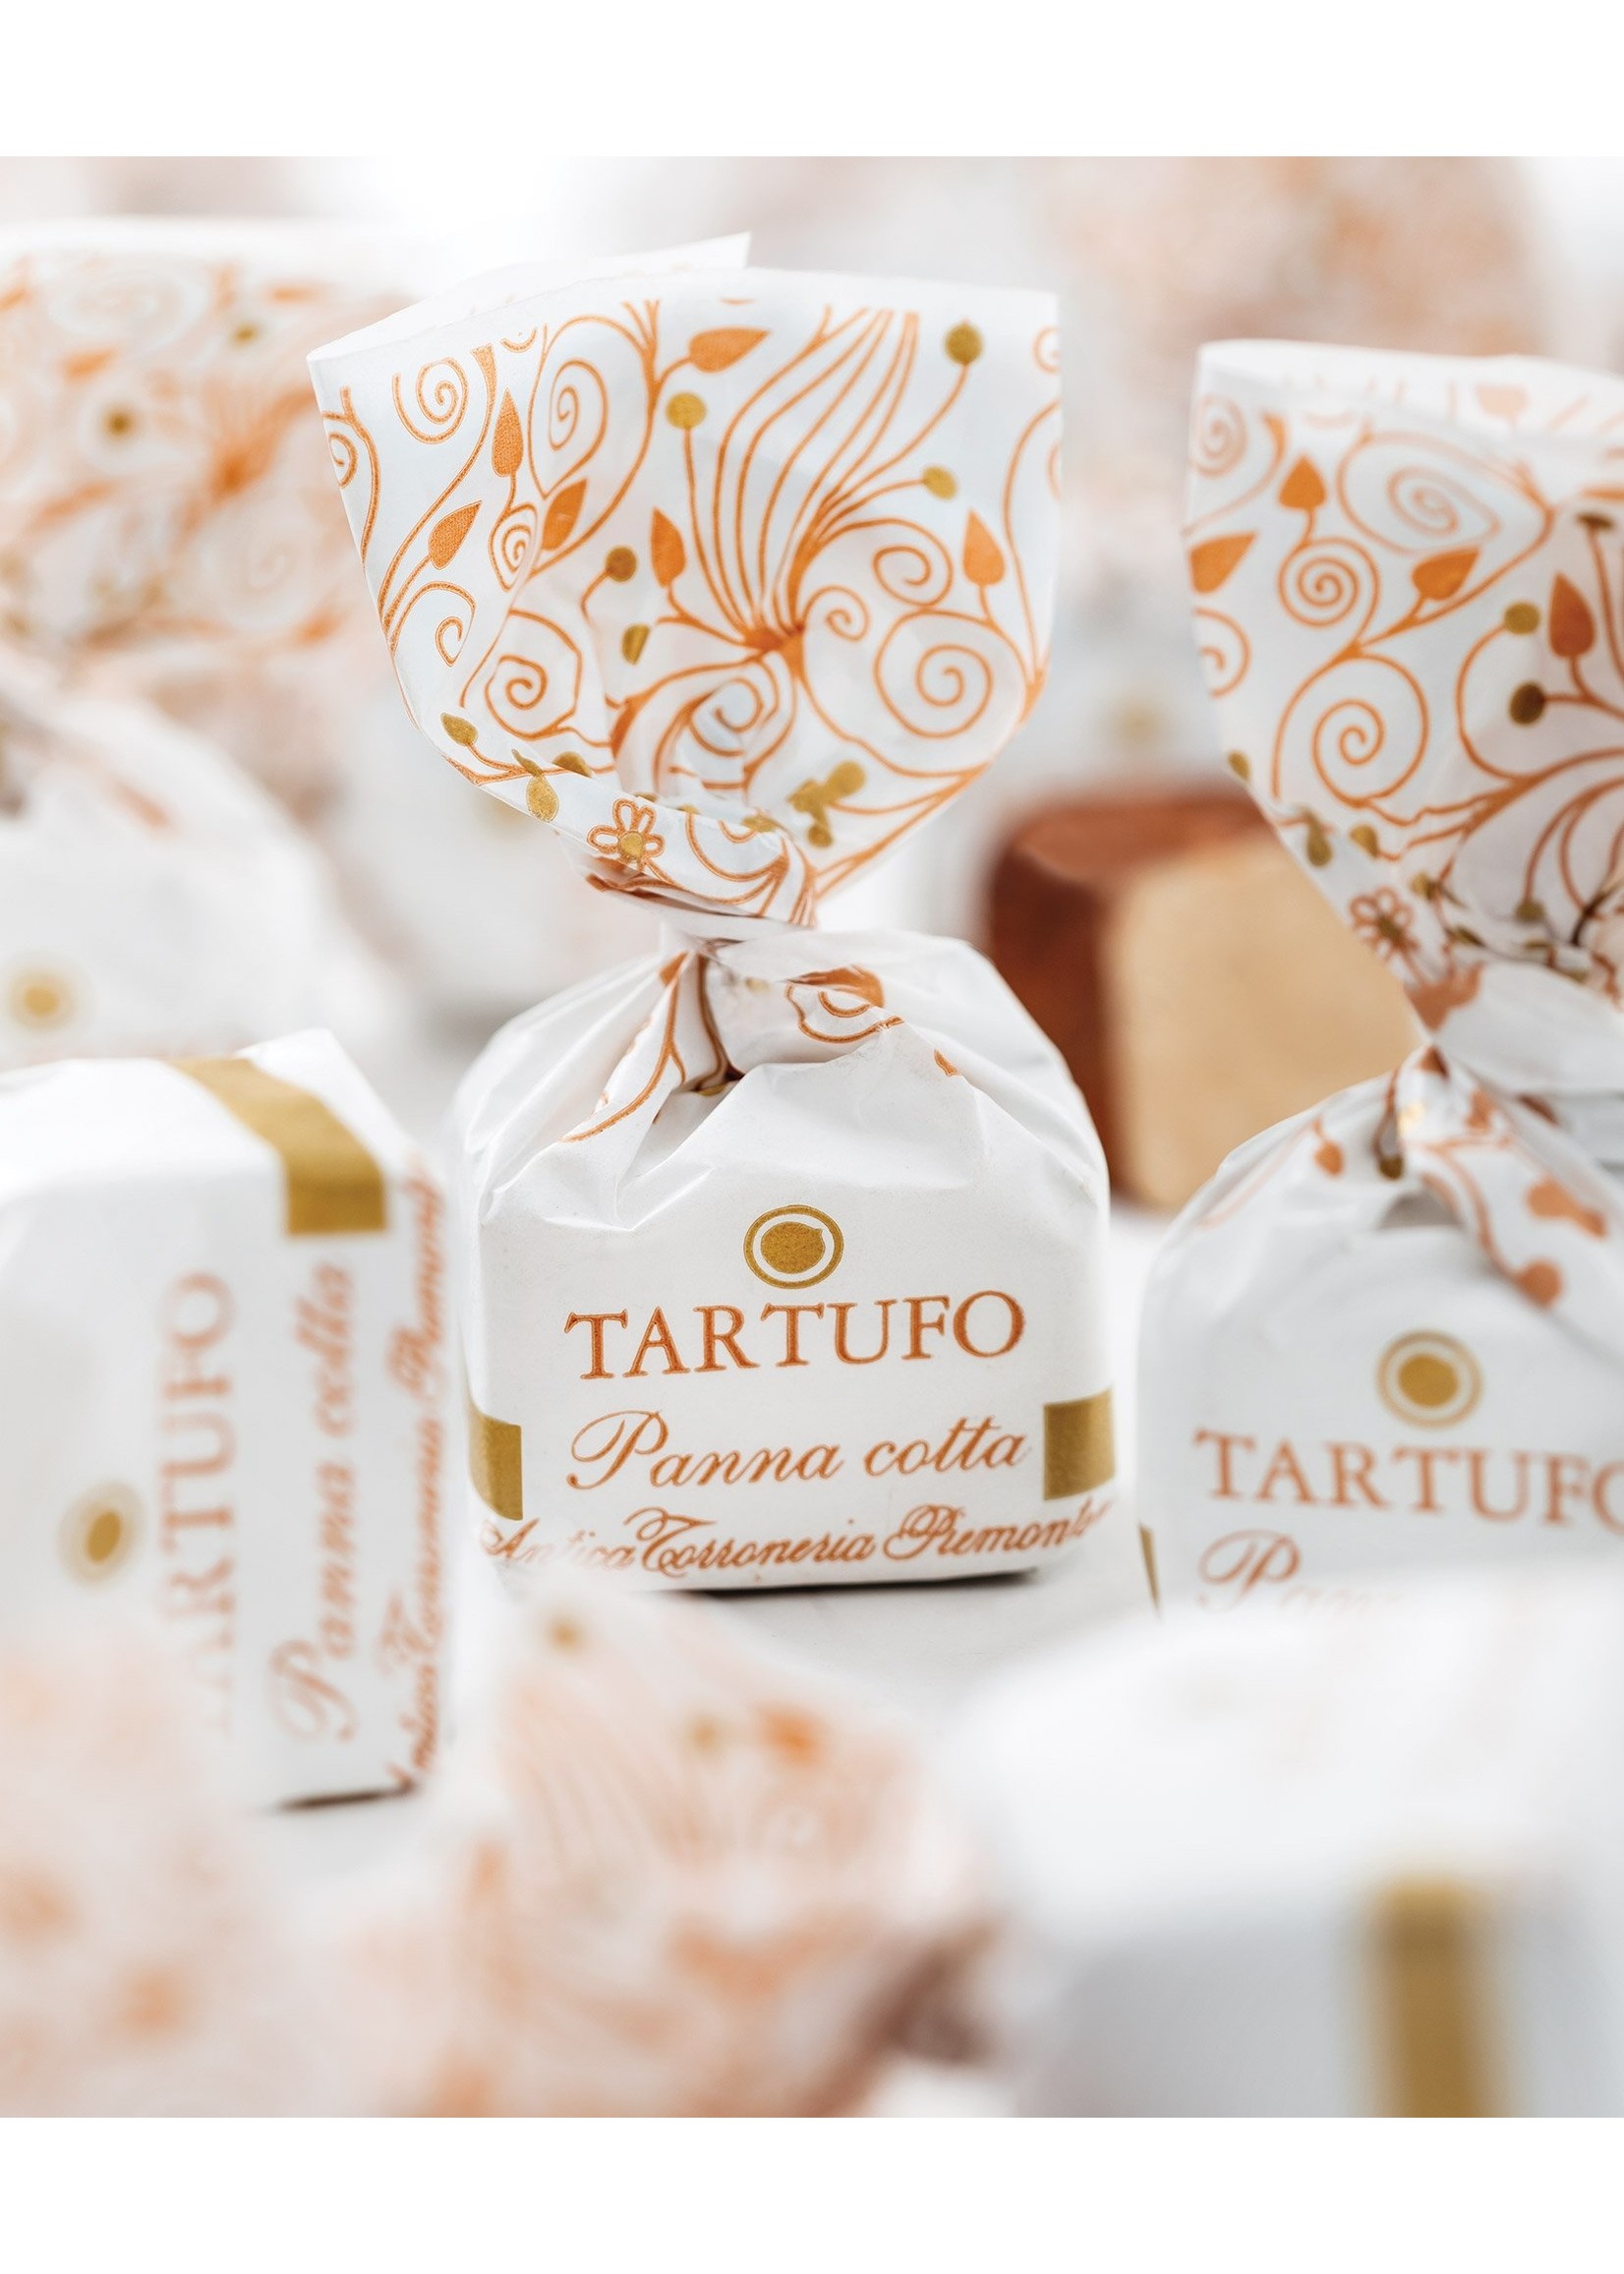 original Italian Tartufo truffle